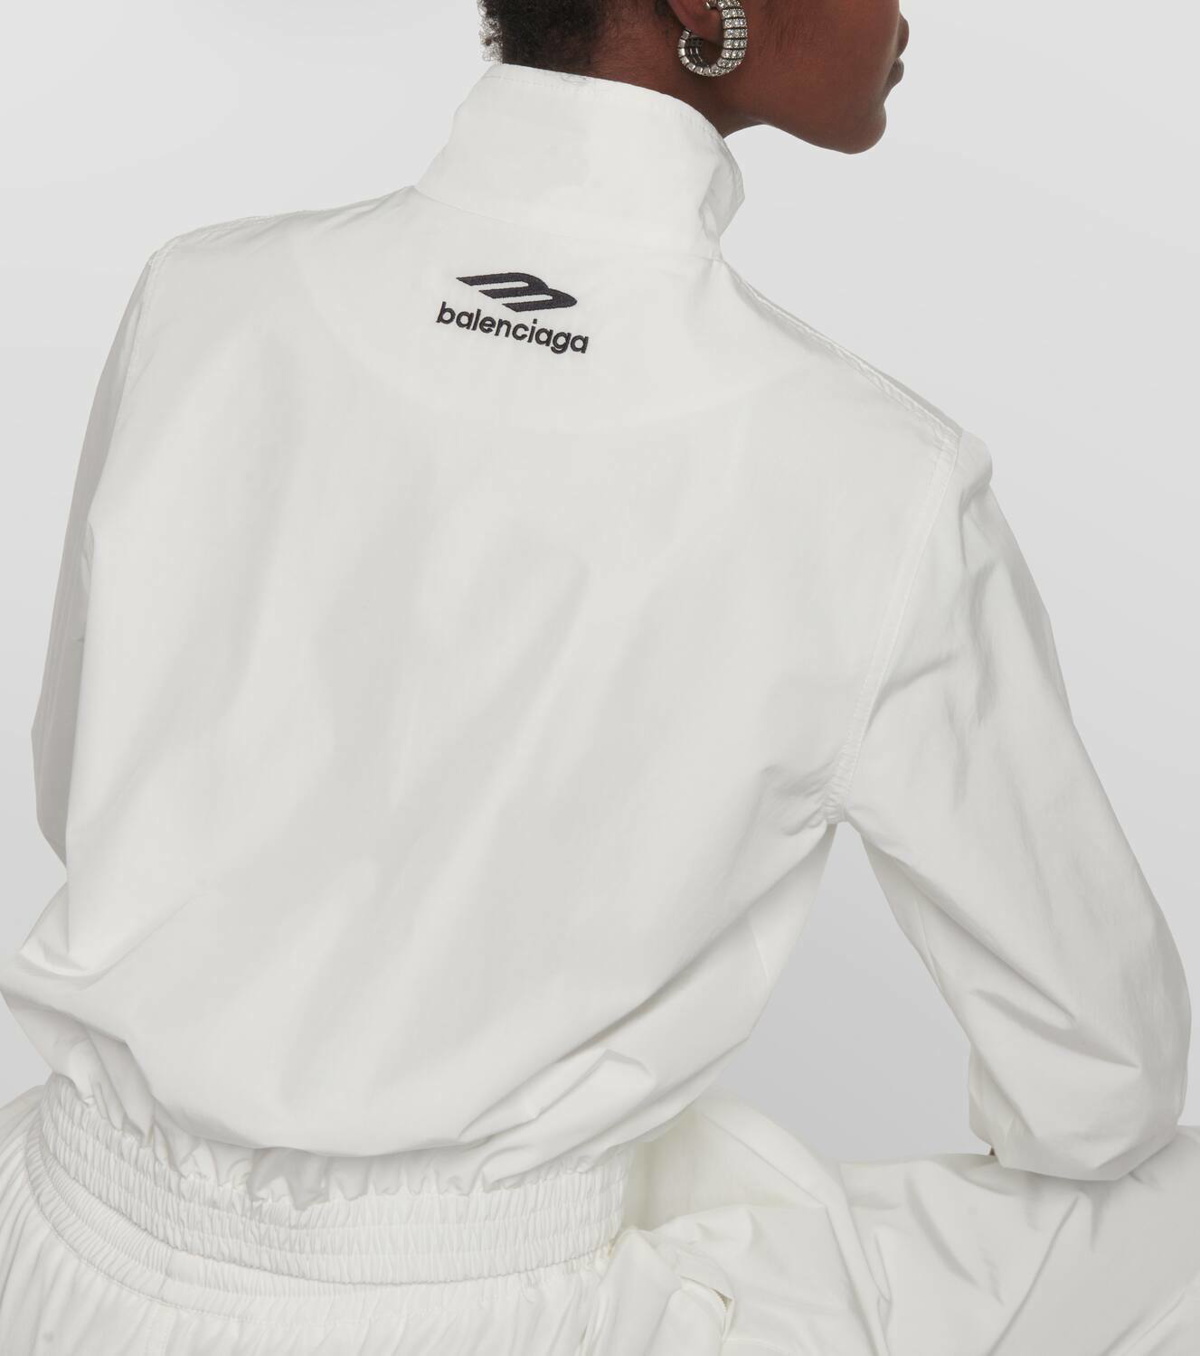 3B Sports Icon track jacket in white - Balenciaga